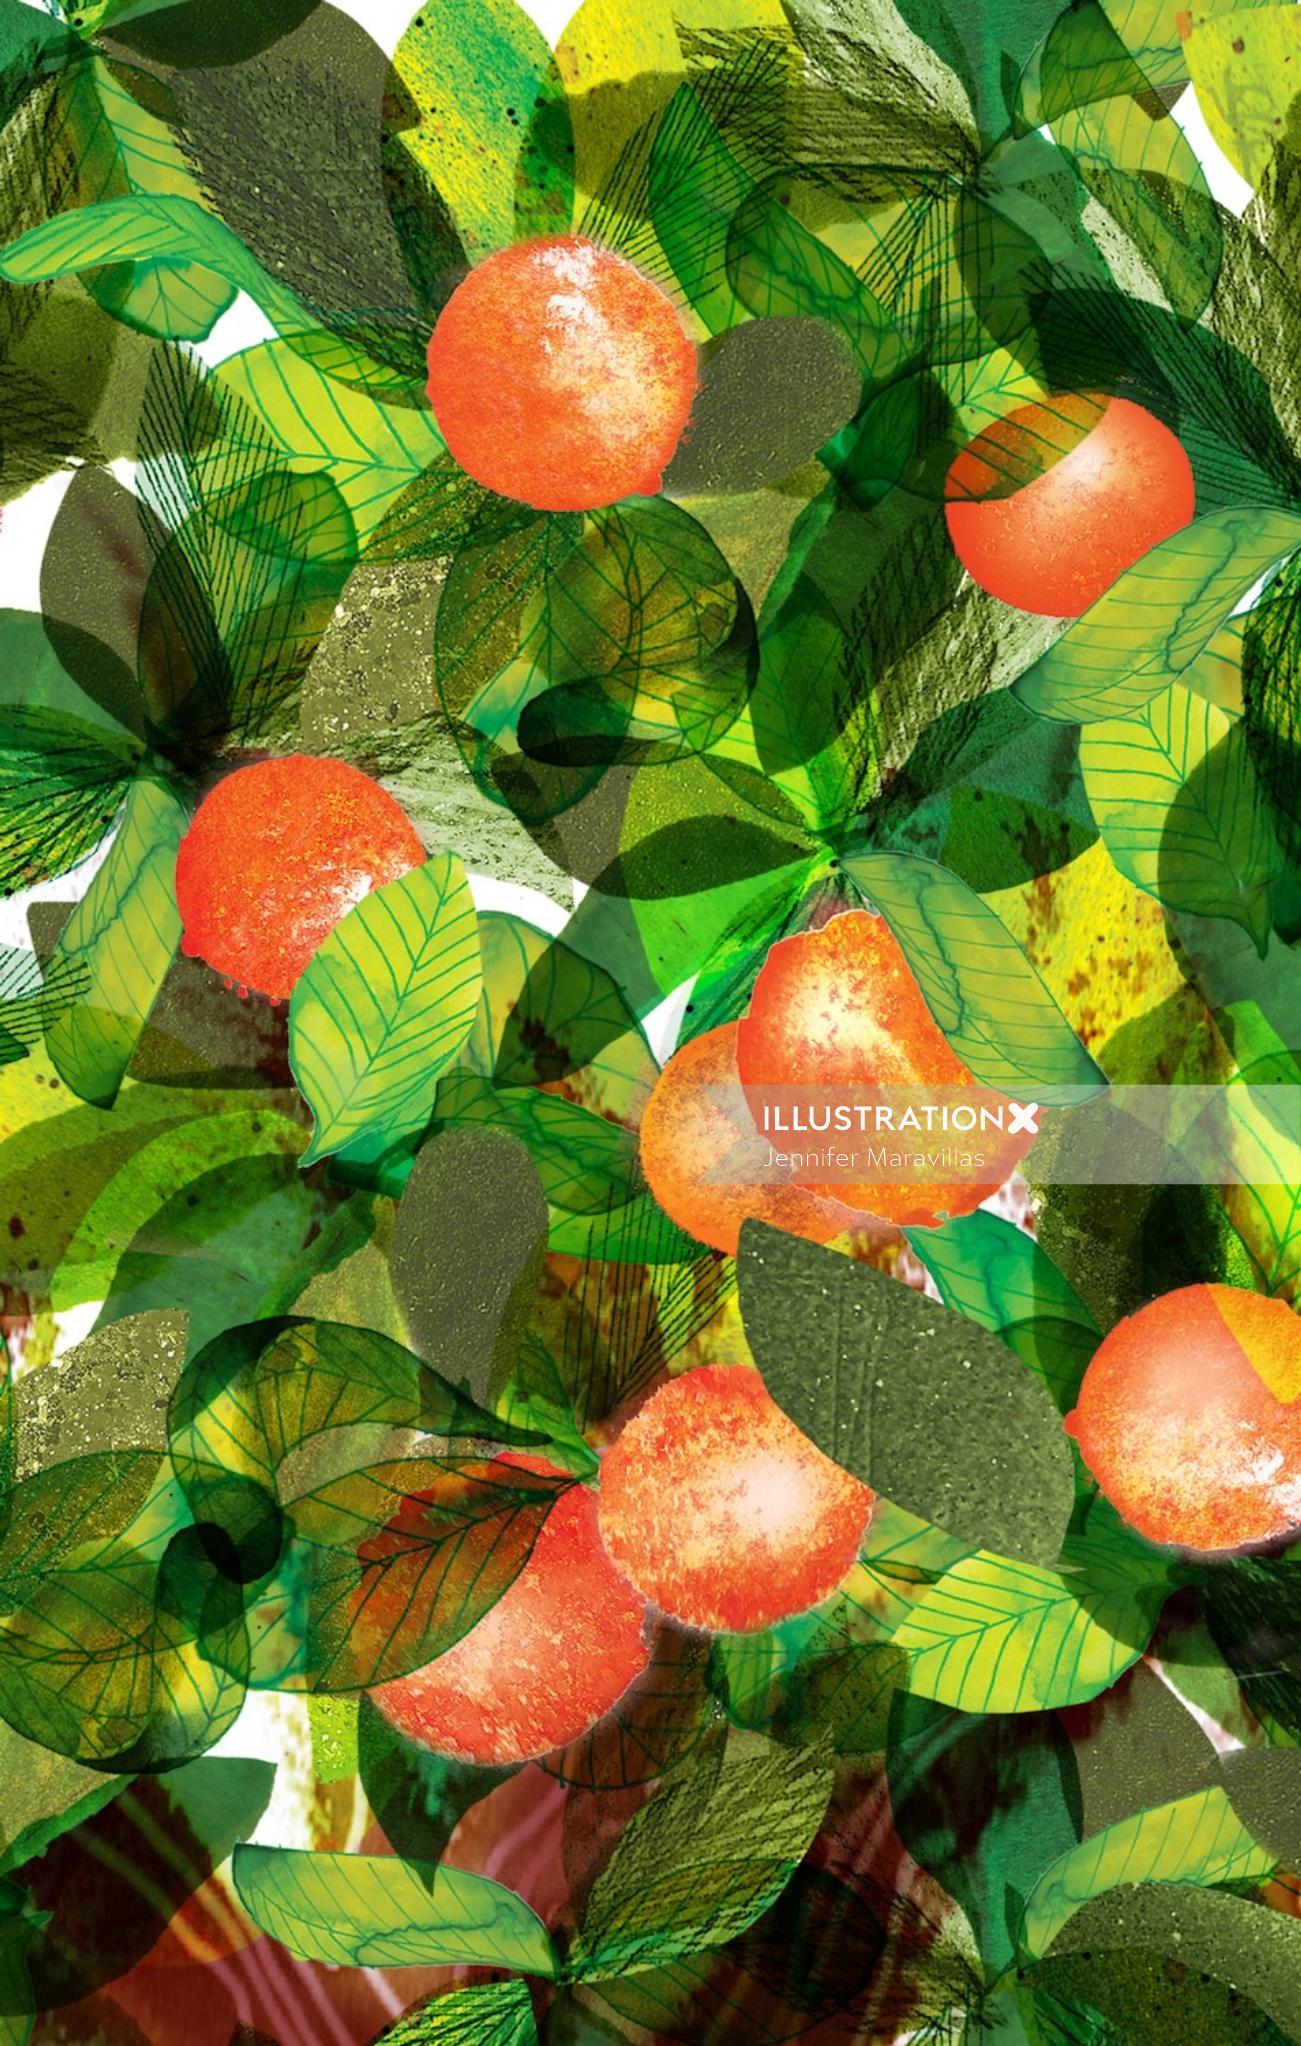 Pomegranate tree illustration by Jennifer Maravillas